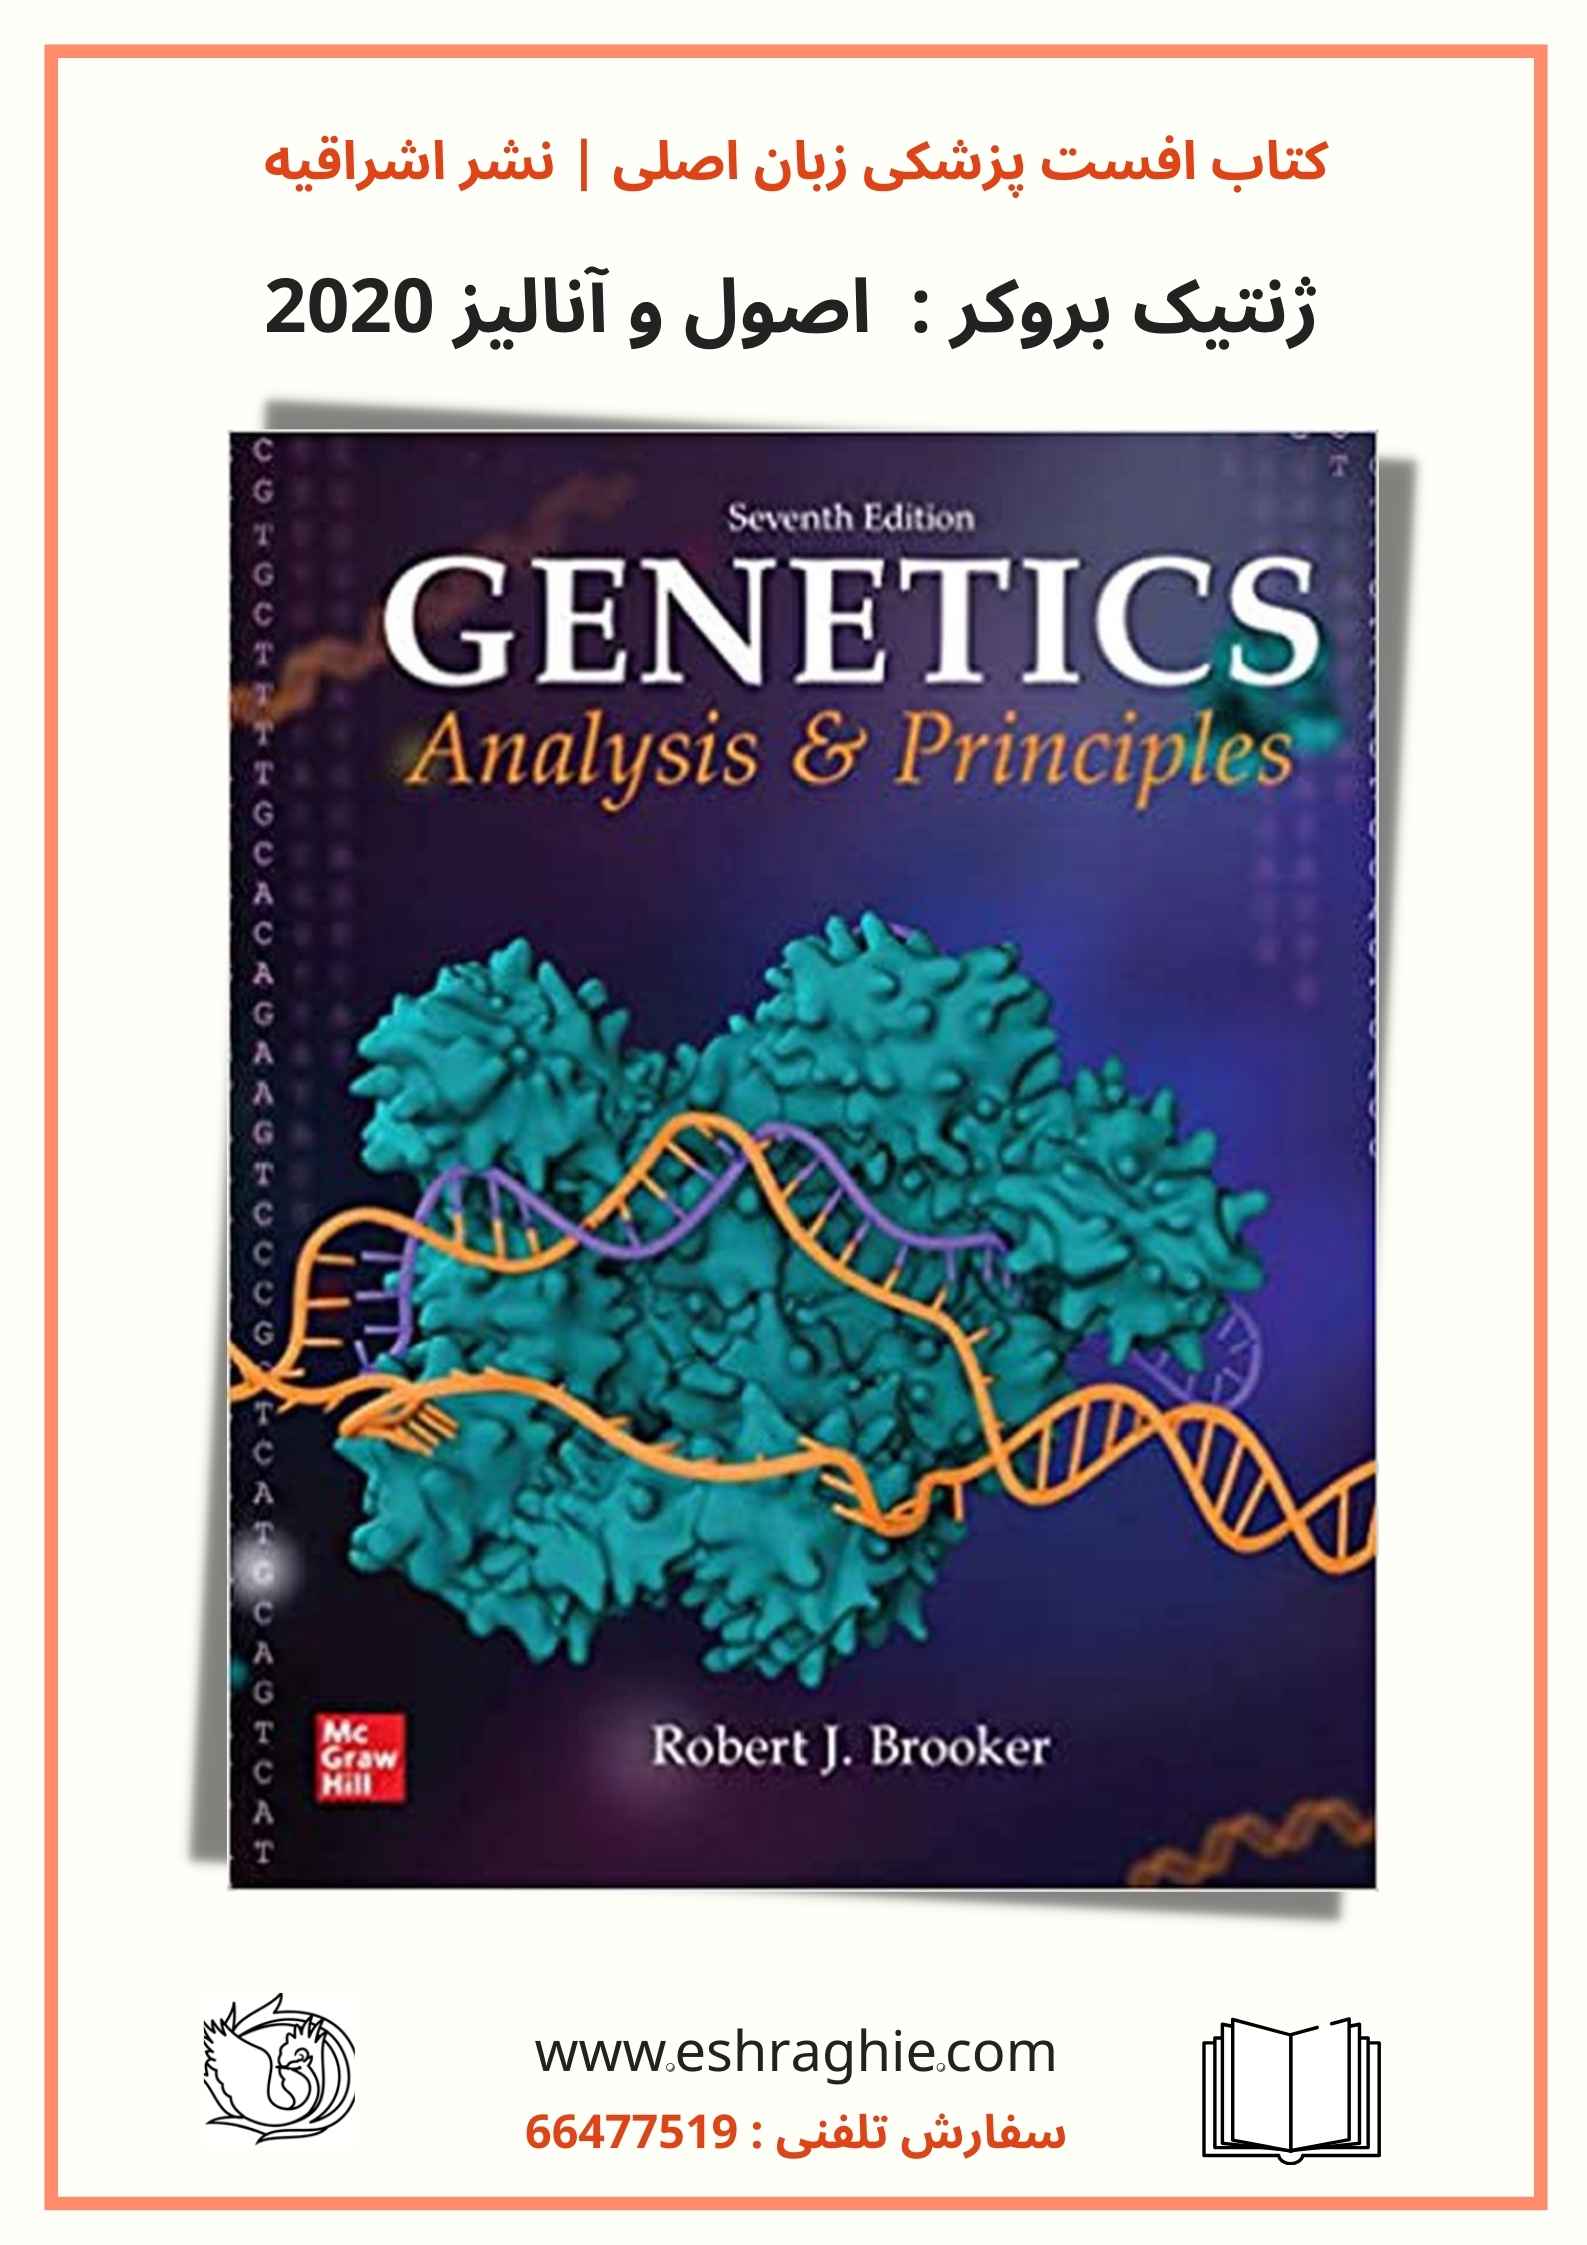 Genetics : Analysis and Principles 7th Edition